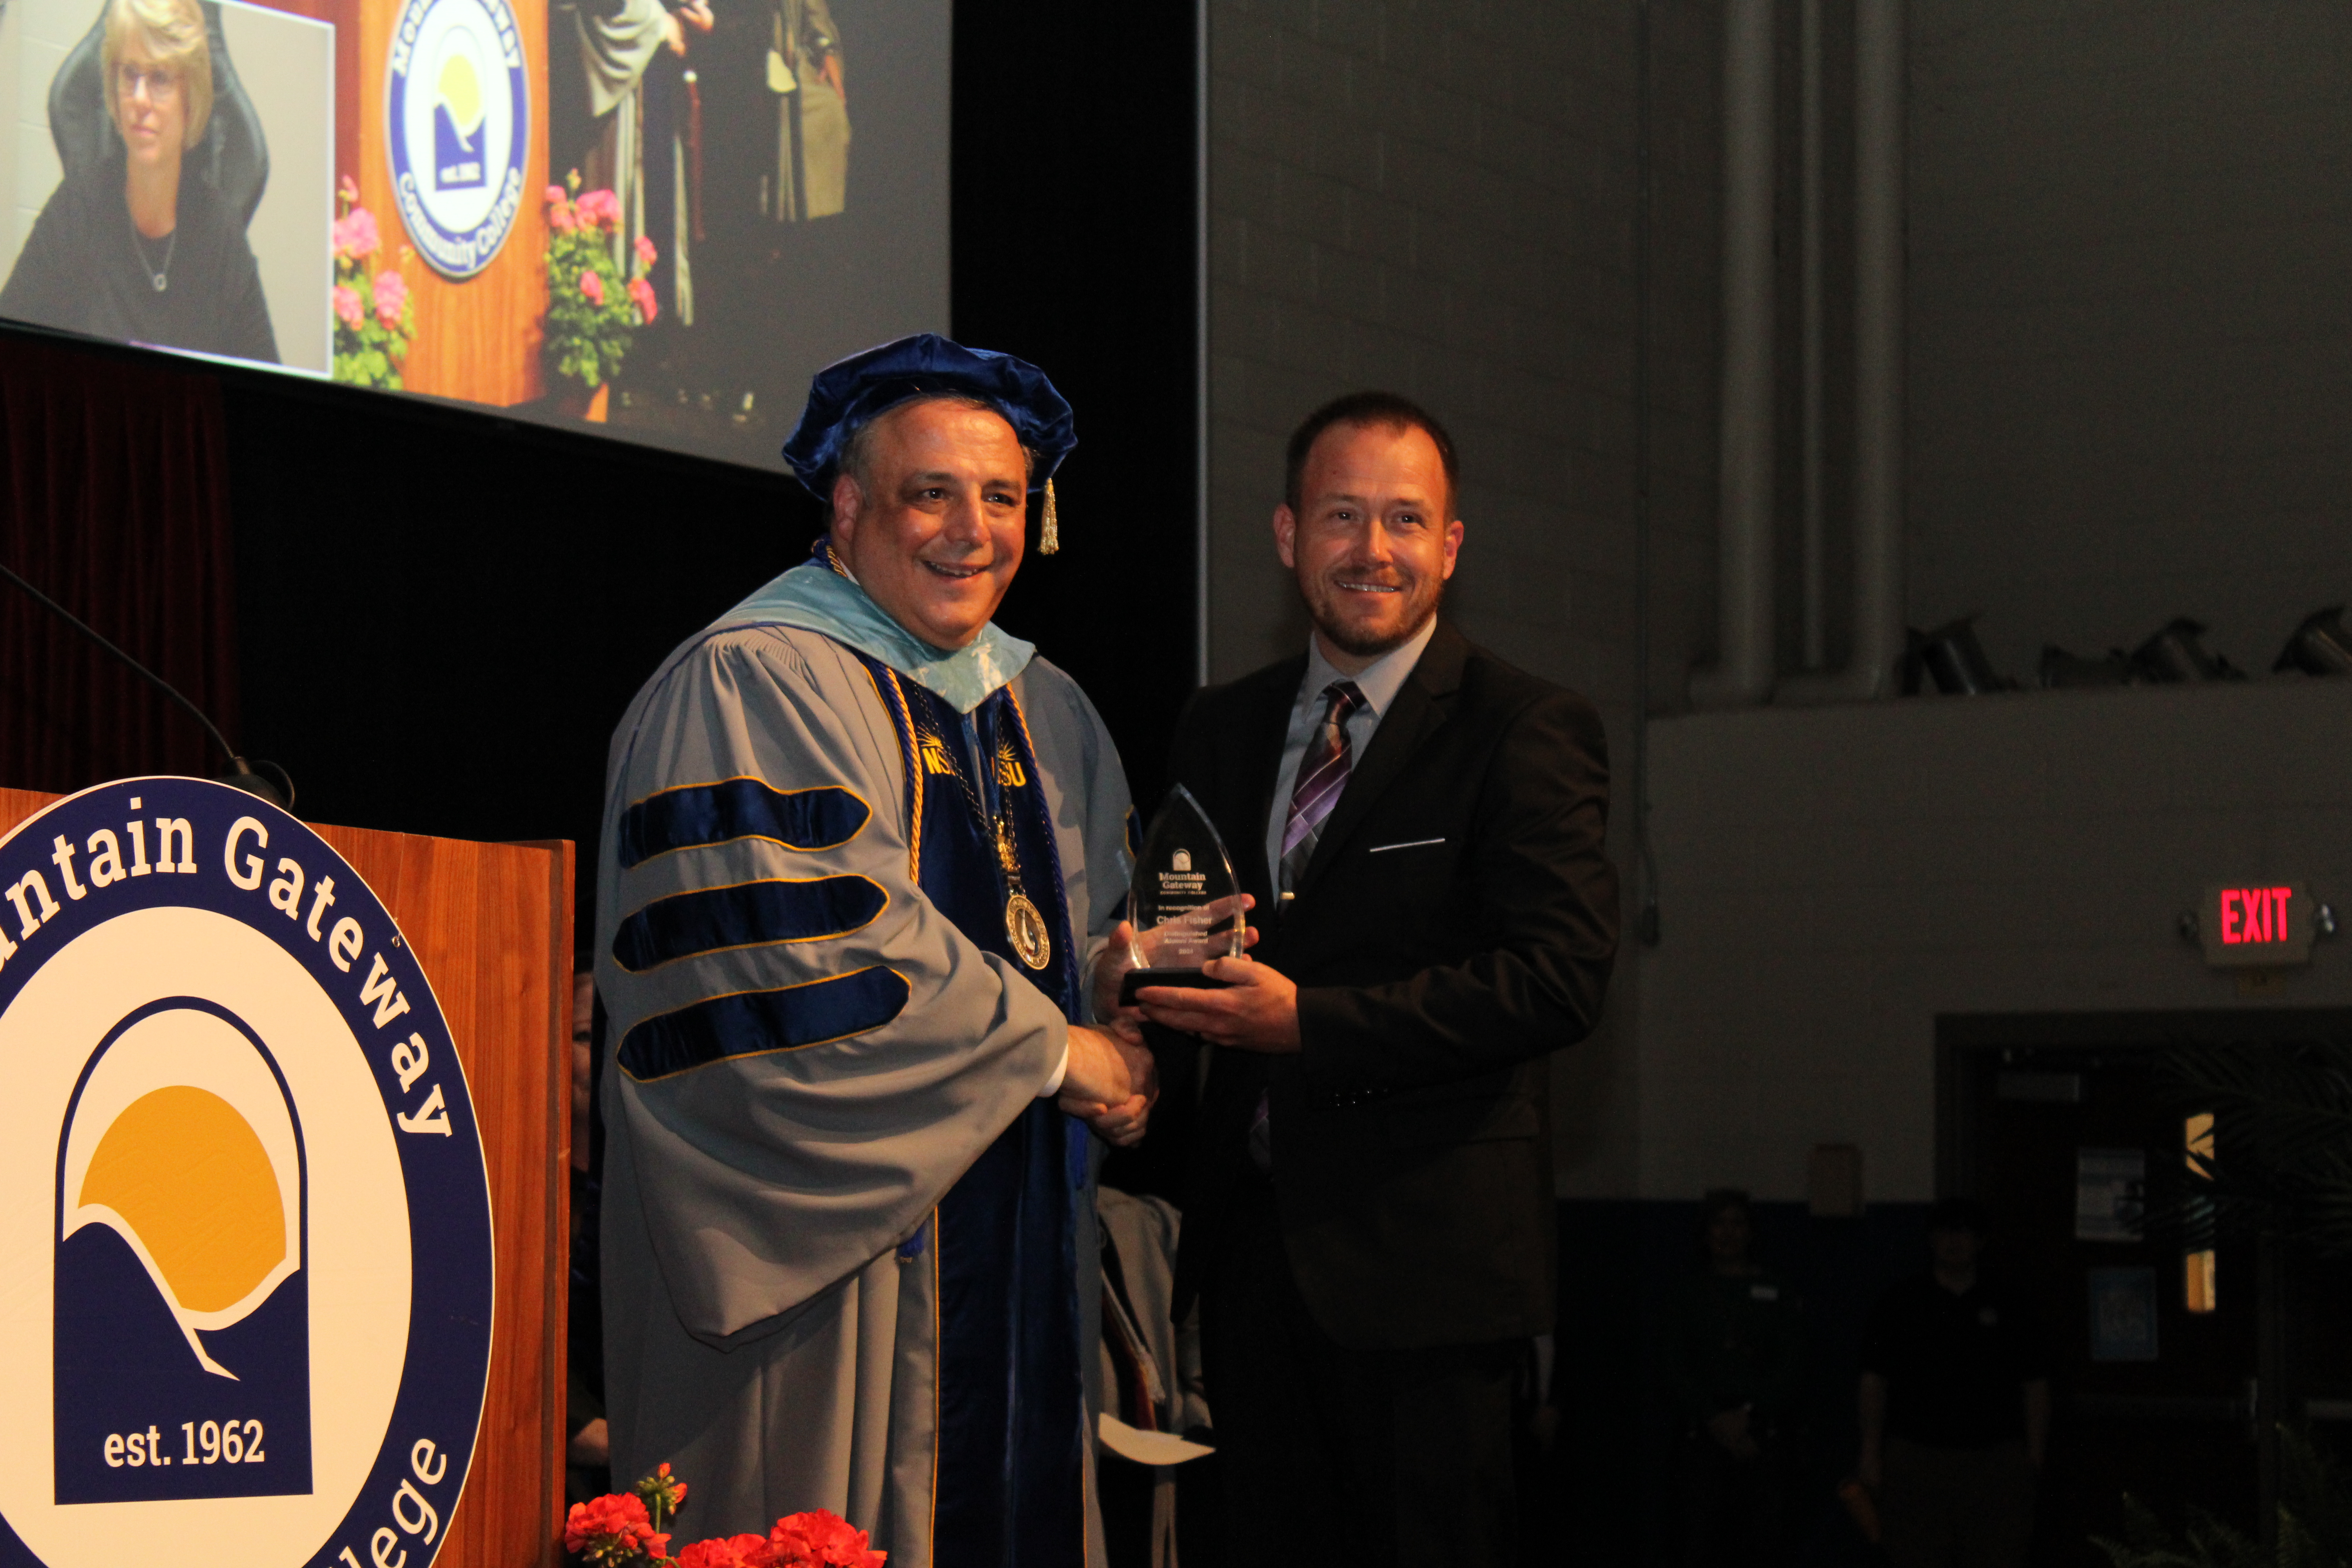 Chris Fisher receives the Distinguished Alumni Award from Dr. John Rainone